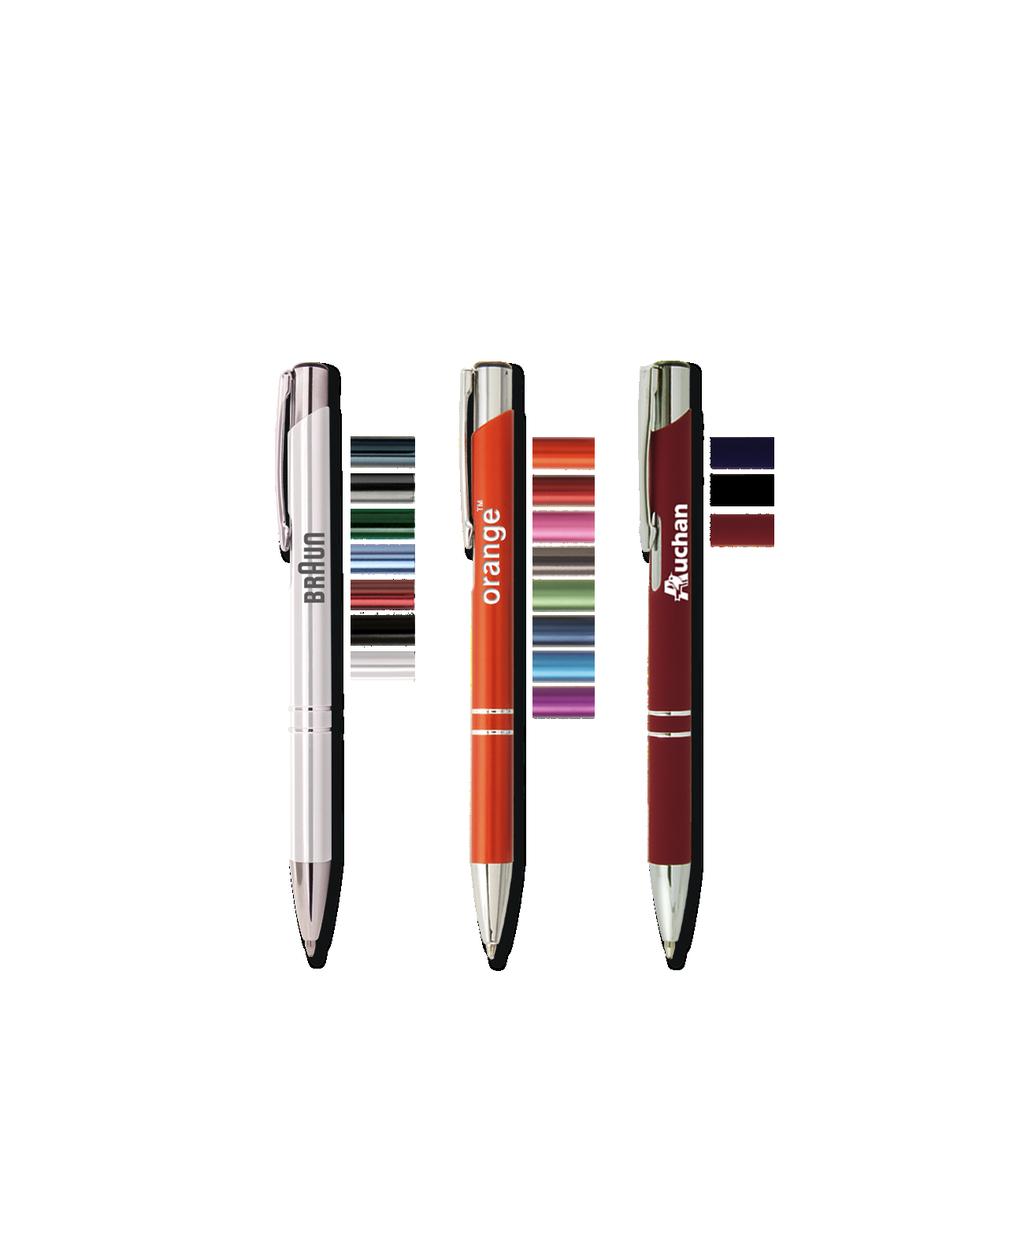 Paragon Familie Unser berühmter Kugelschreiber in glänzend, matt und rubber Style. LPG LDE LPU Rubber Style LPG / LDE 500-10.000 1.